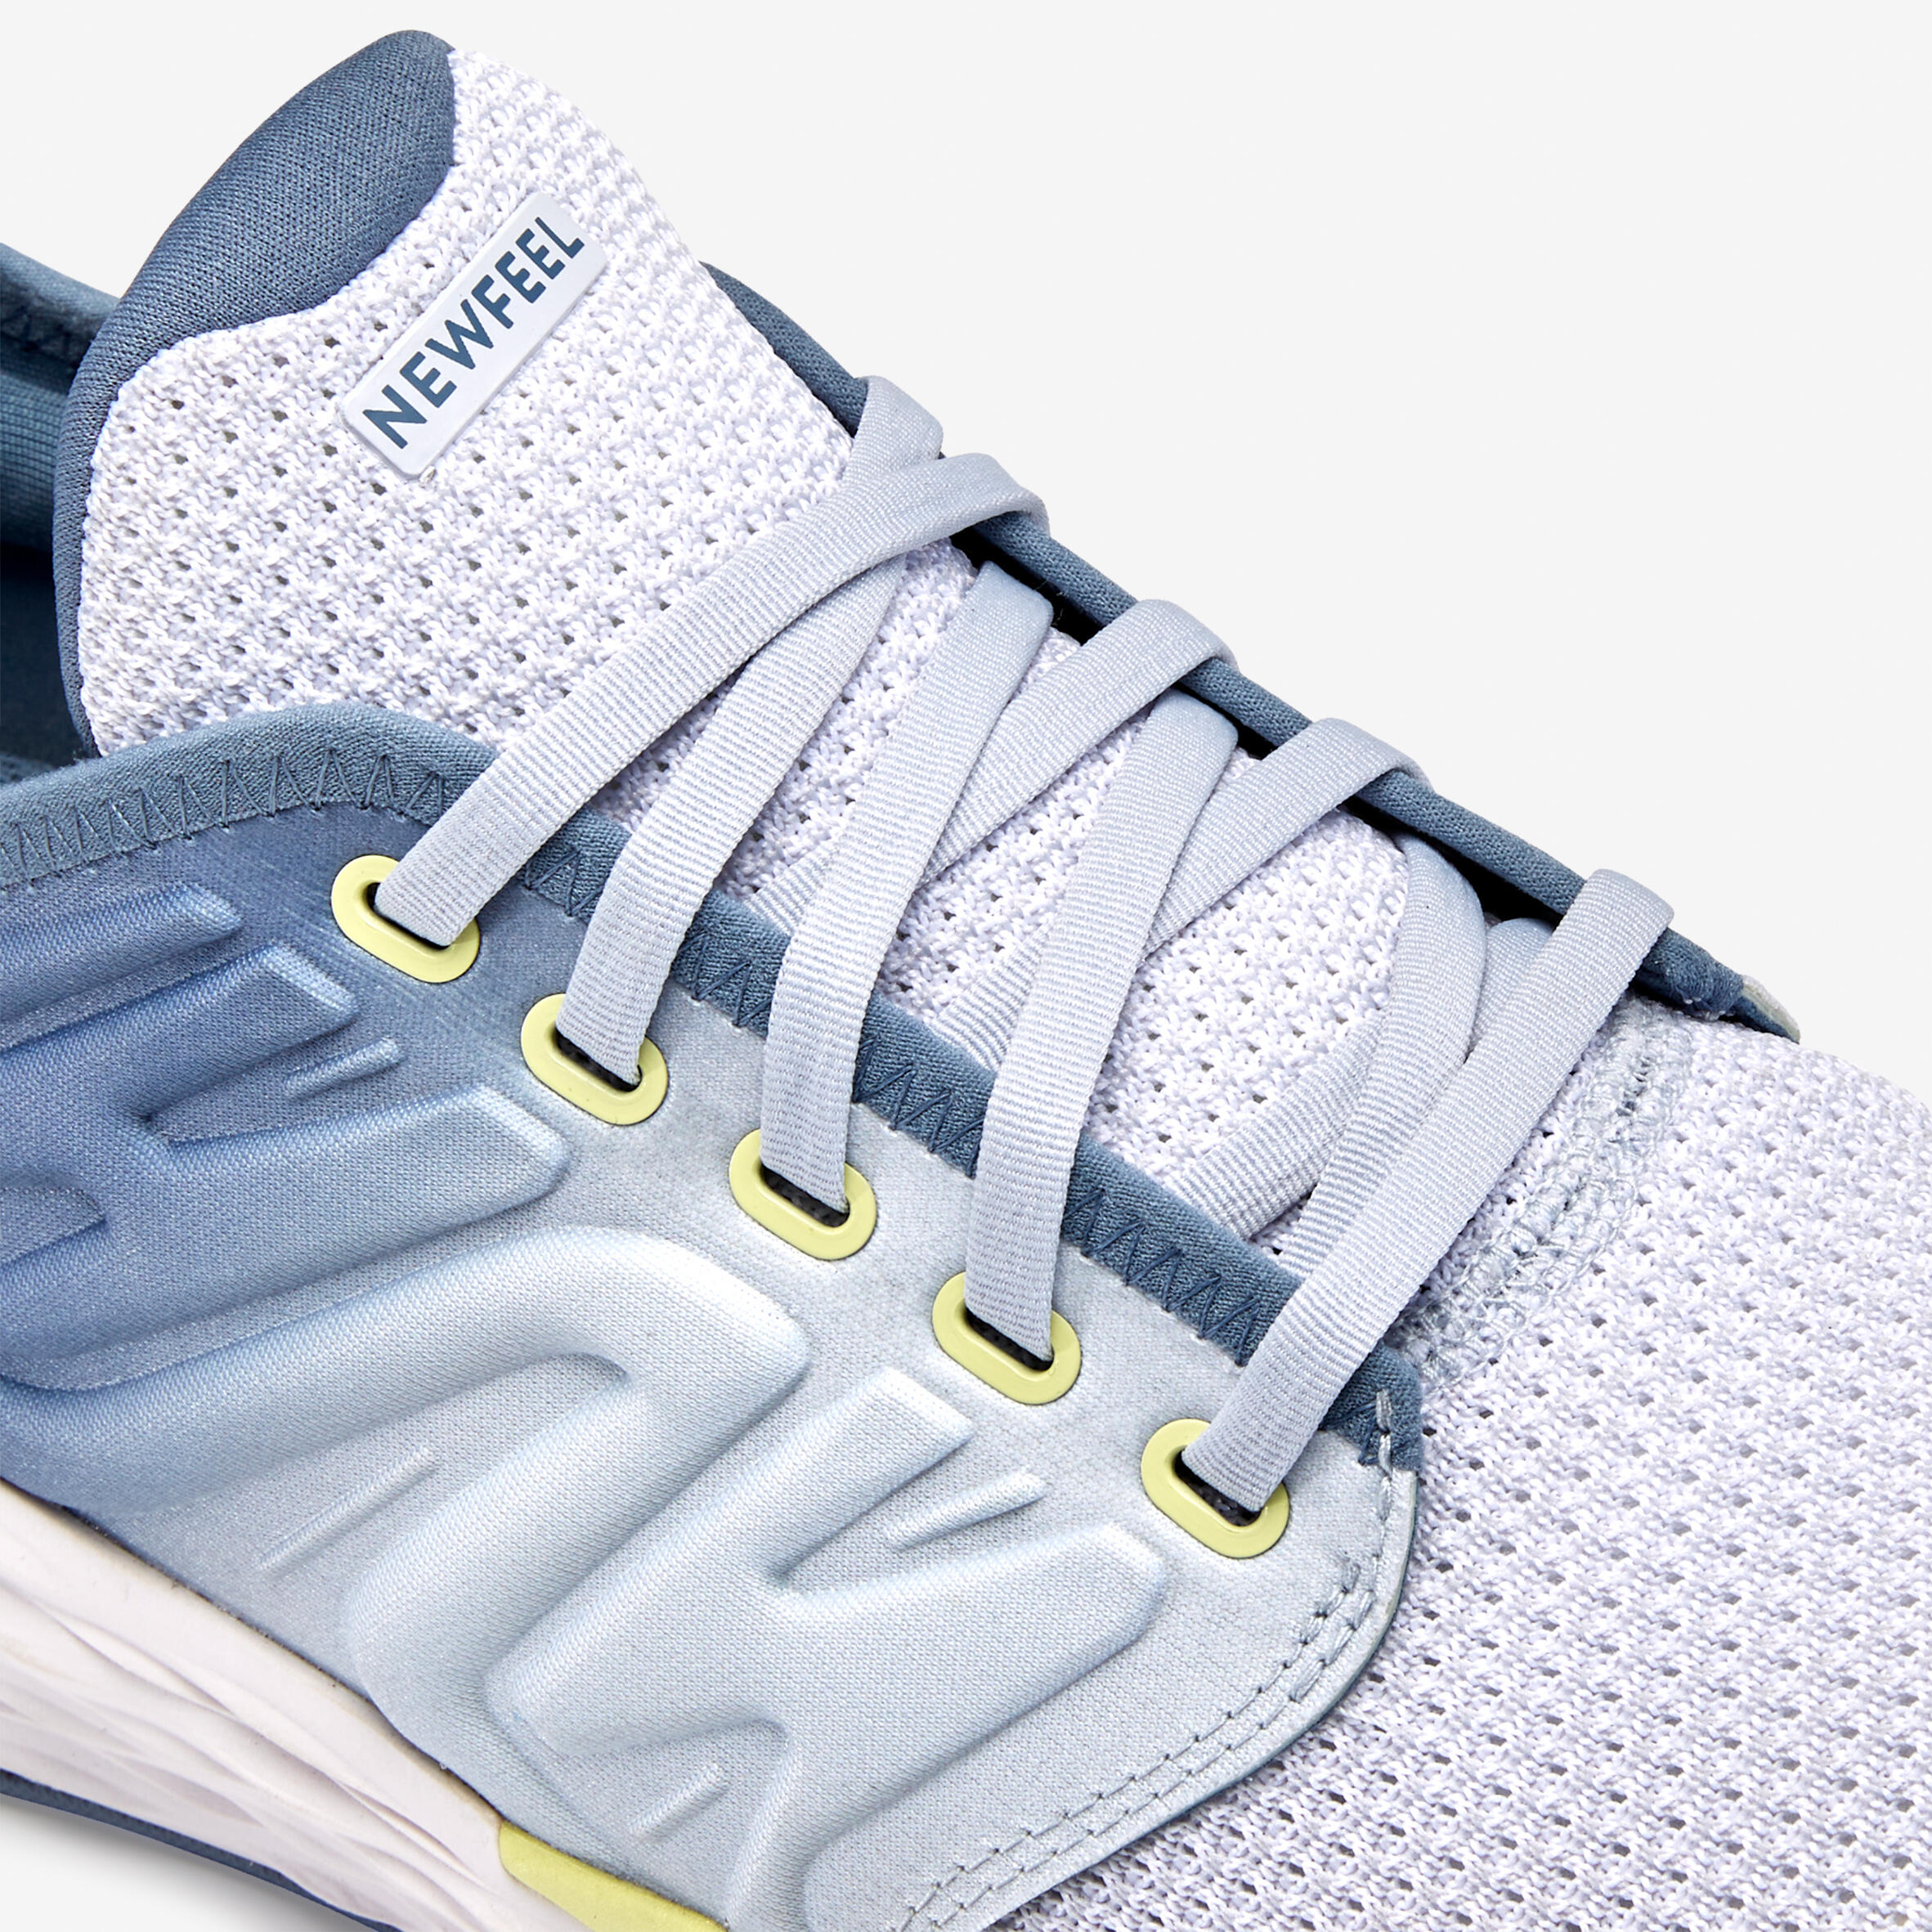 Fitness Walking Shoes Sportwalk Comfort - blue/grey 7/7